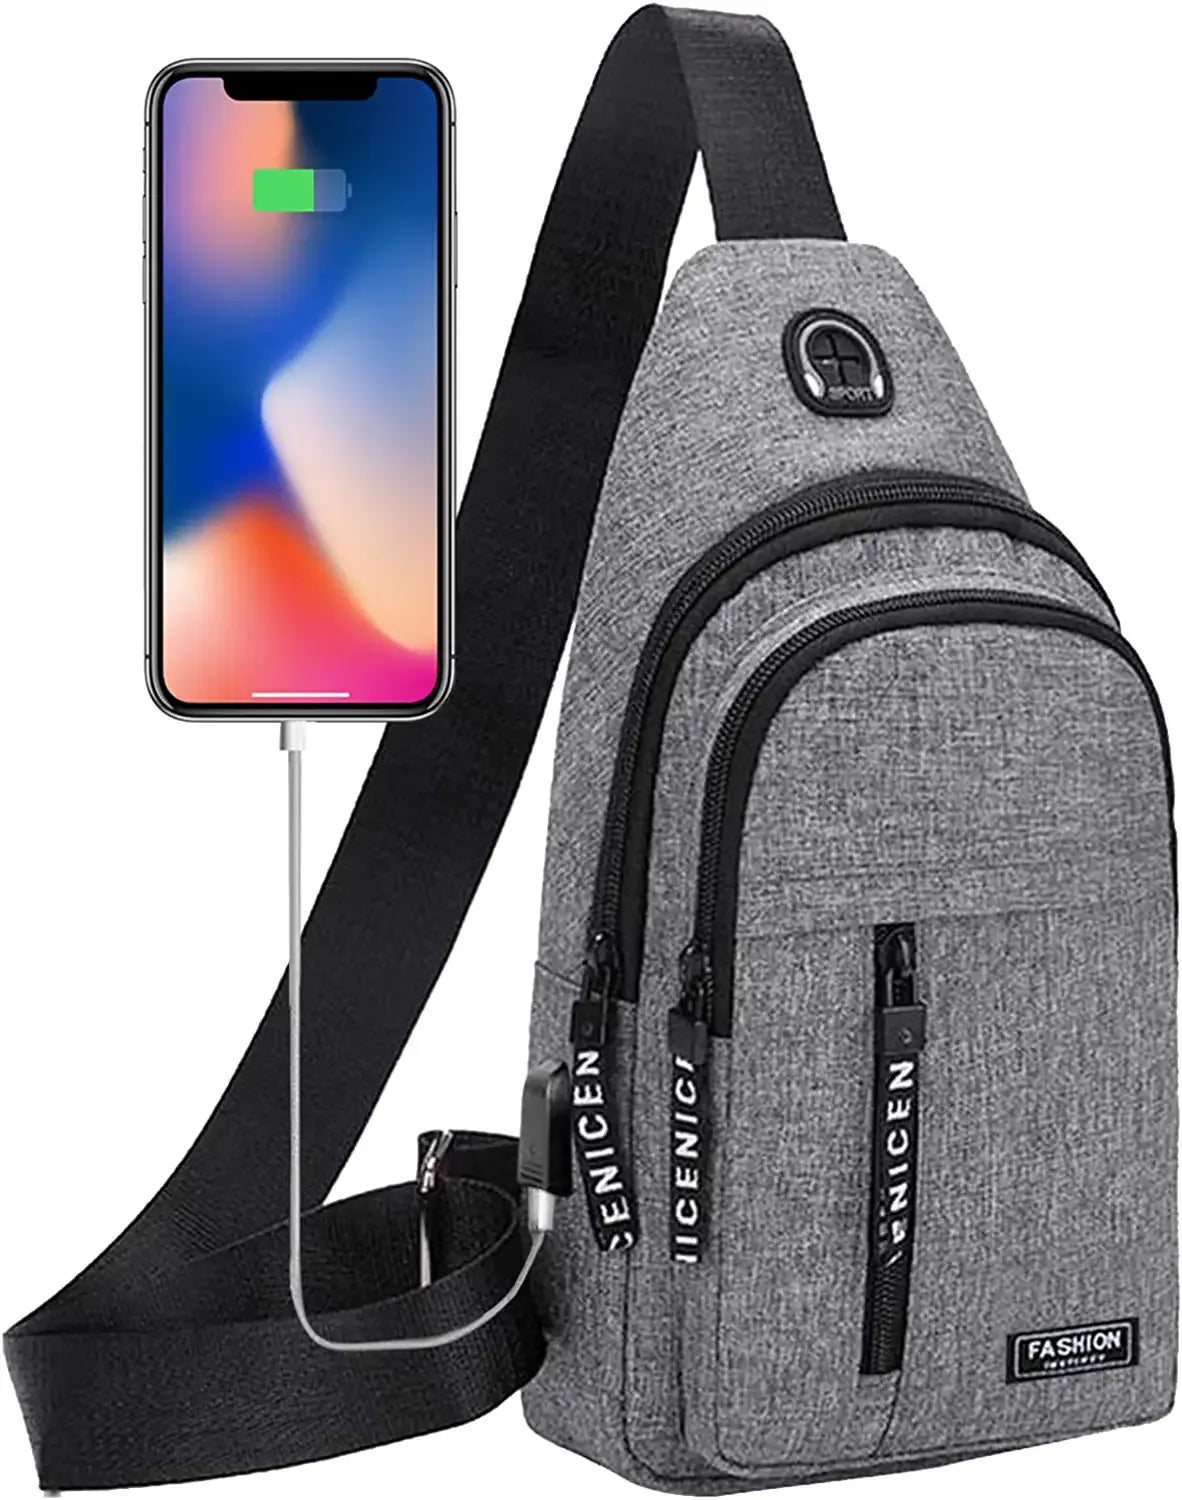 New Multi-functional Men Crossbody Bag Waterproof Shoulder Bag Travel Hiking Camping Sling Bag Pack Messenger Chest Bag For Male